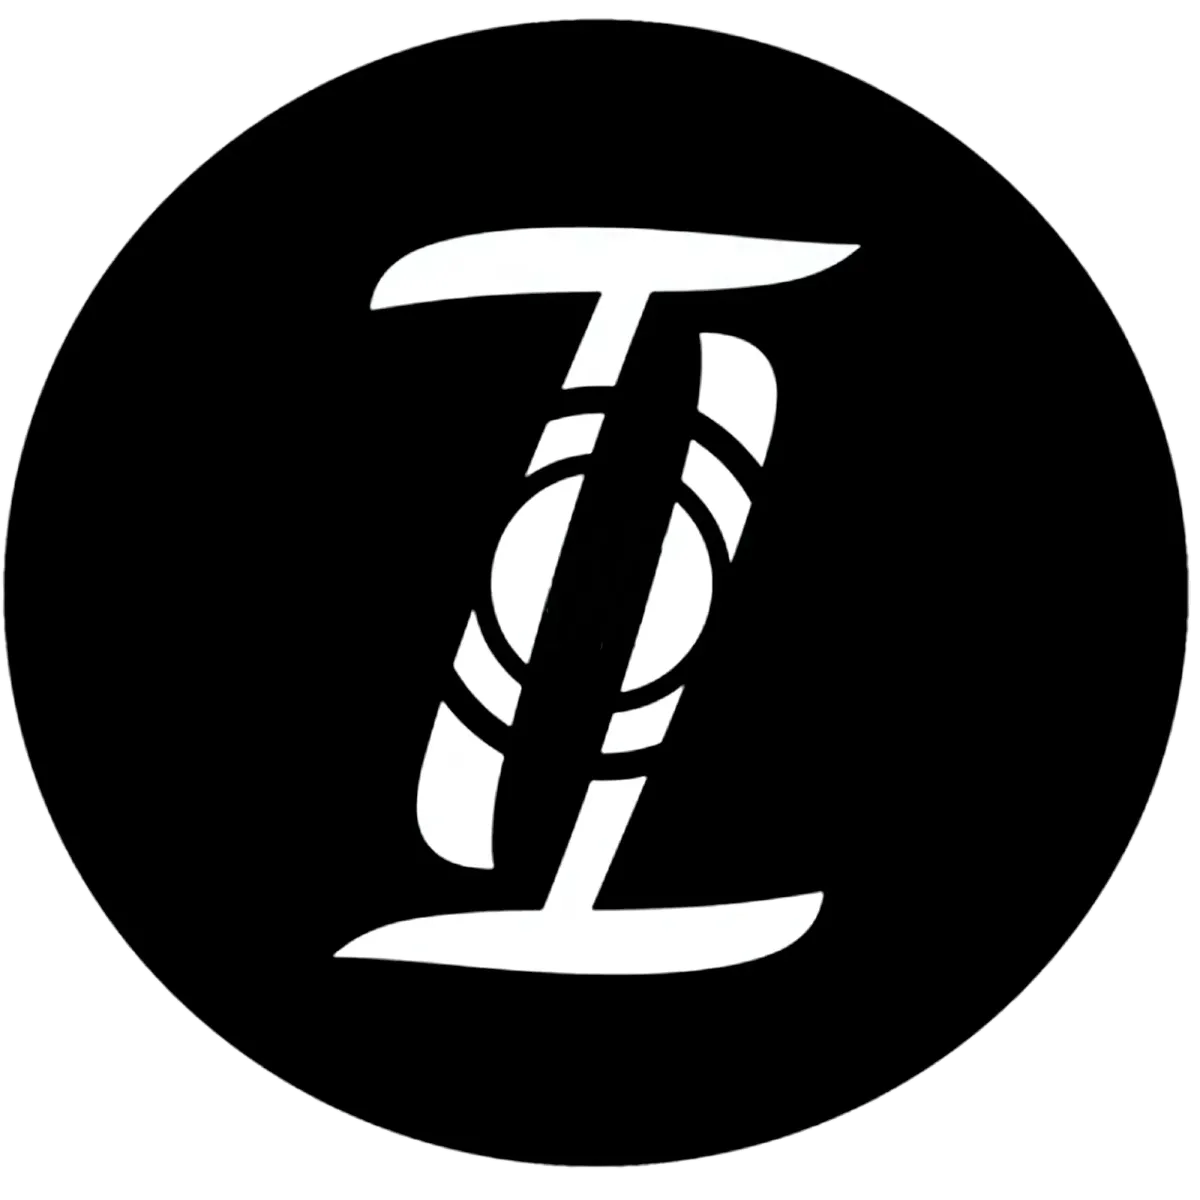 TpTag Logo - Leader in Digital Business Card technology.